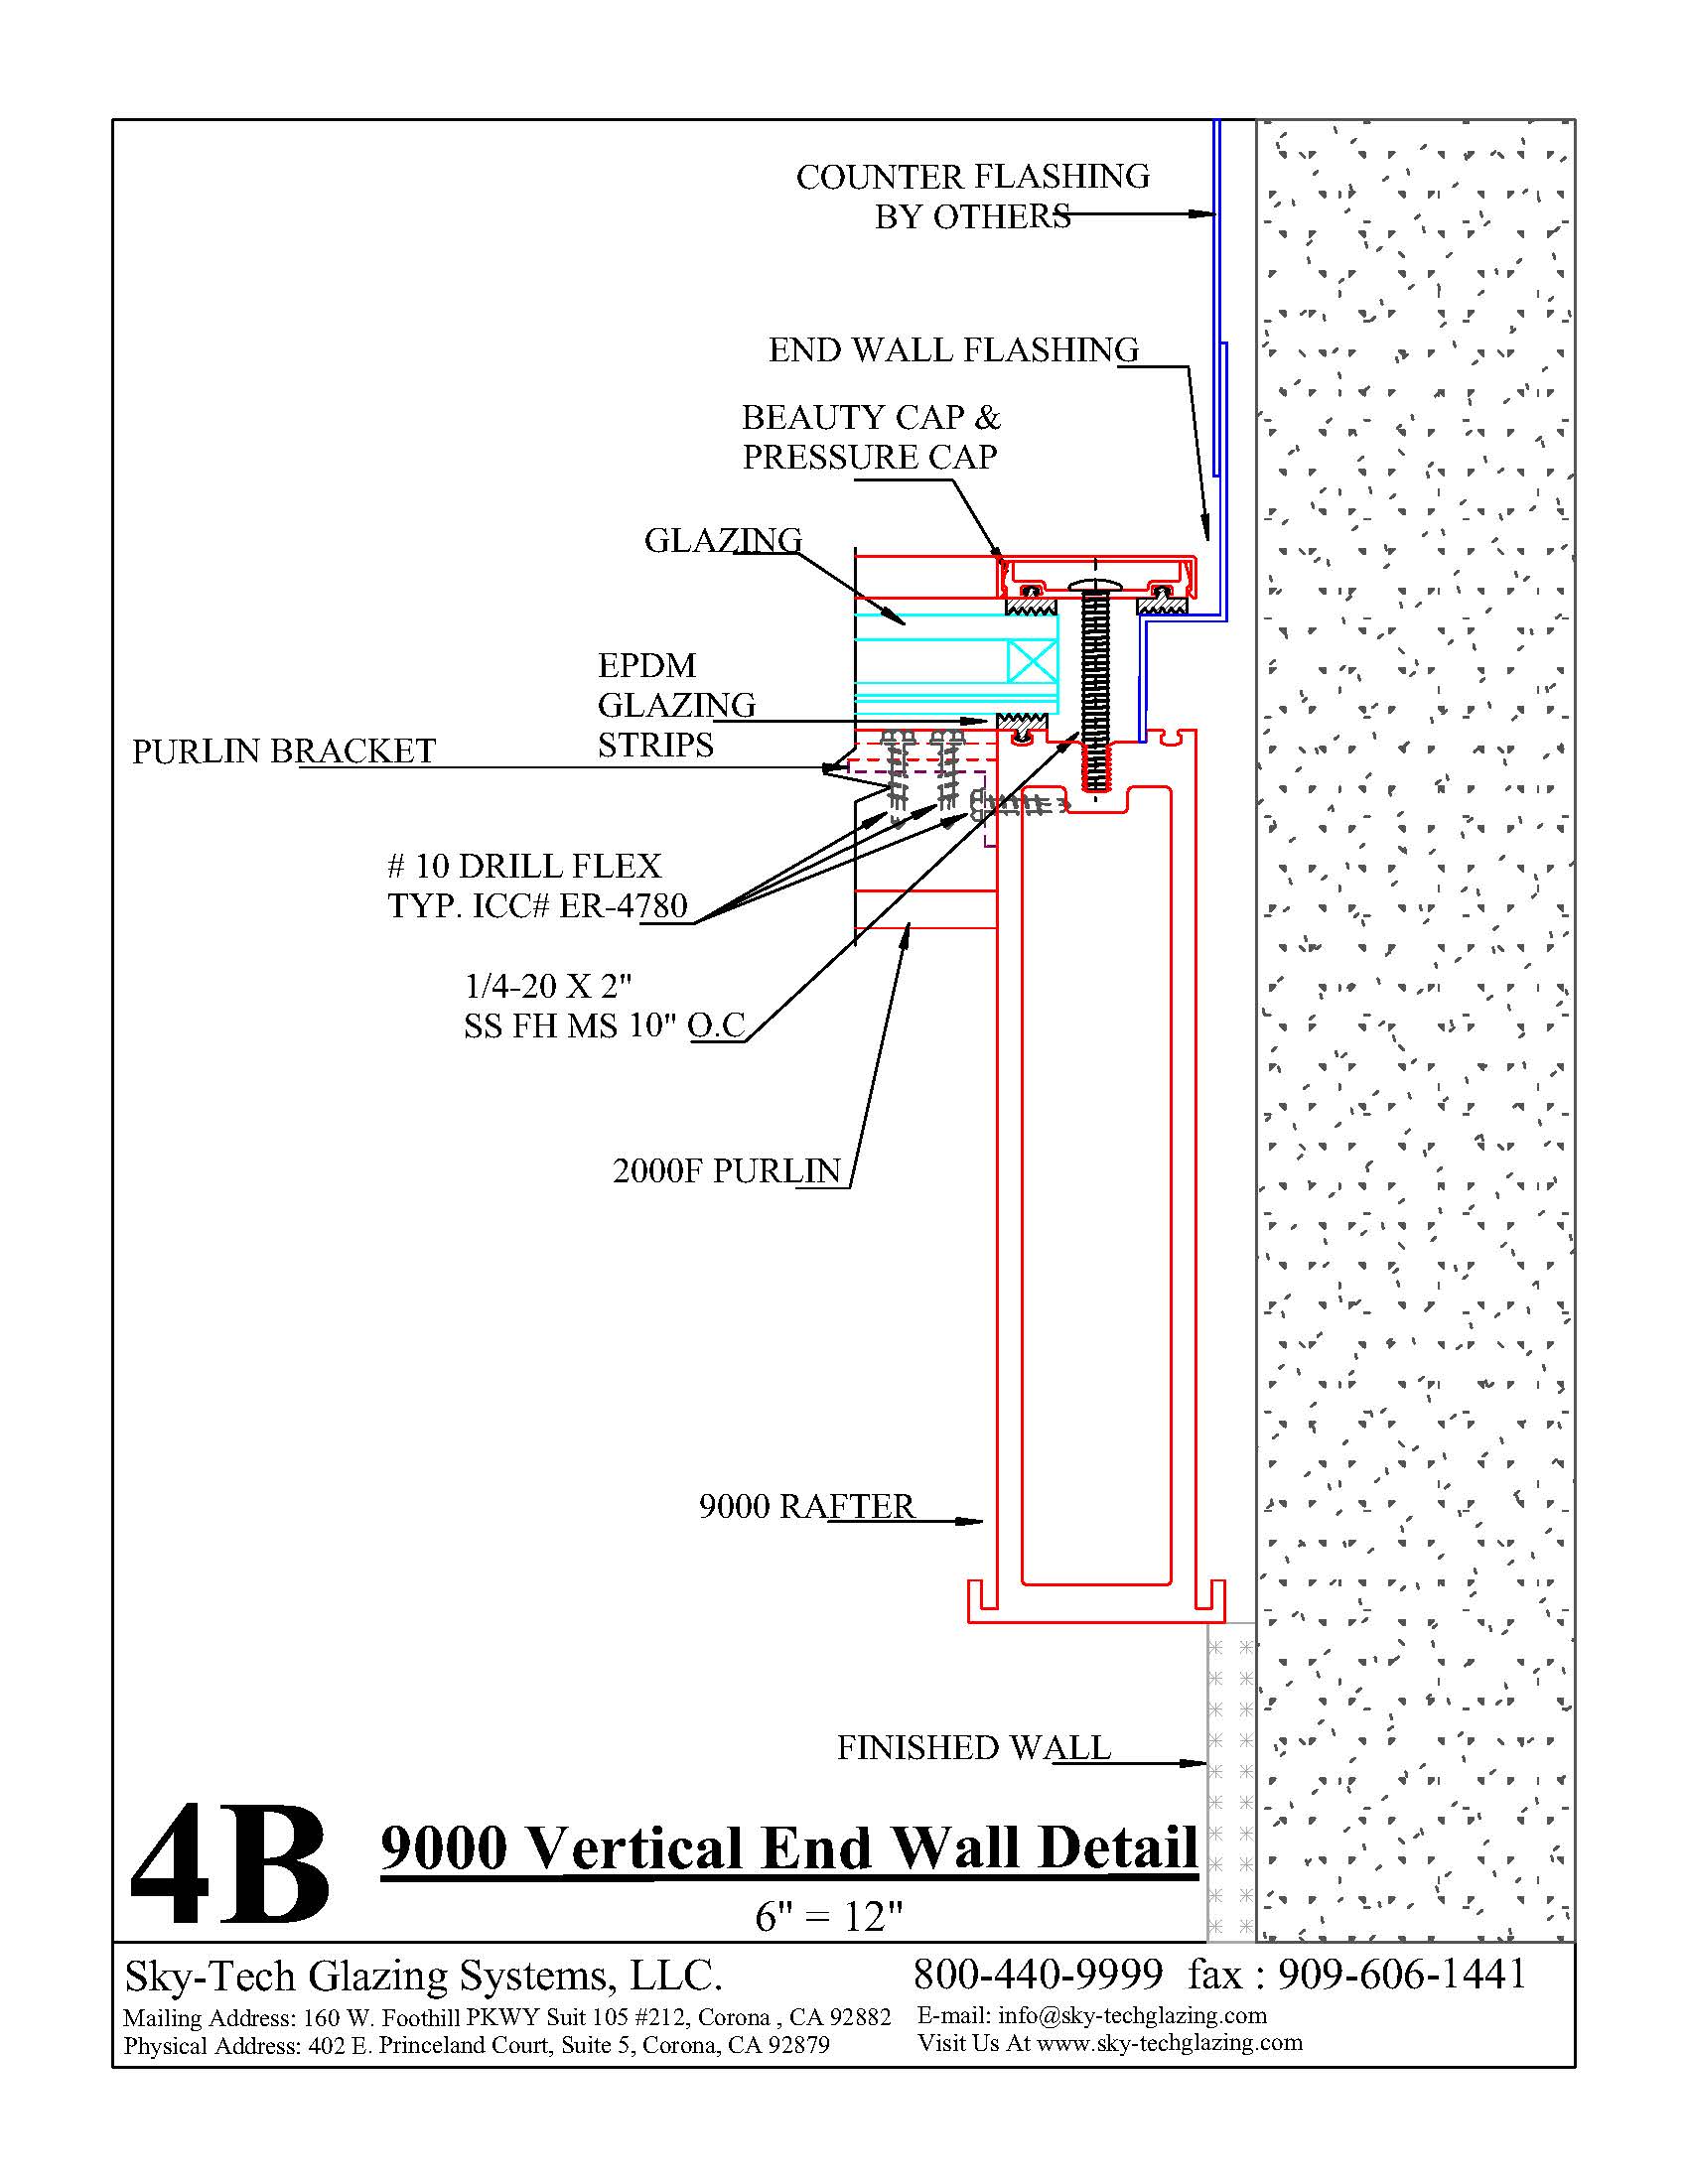 4B 9000 Vertical End Wall Detail